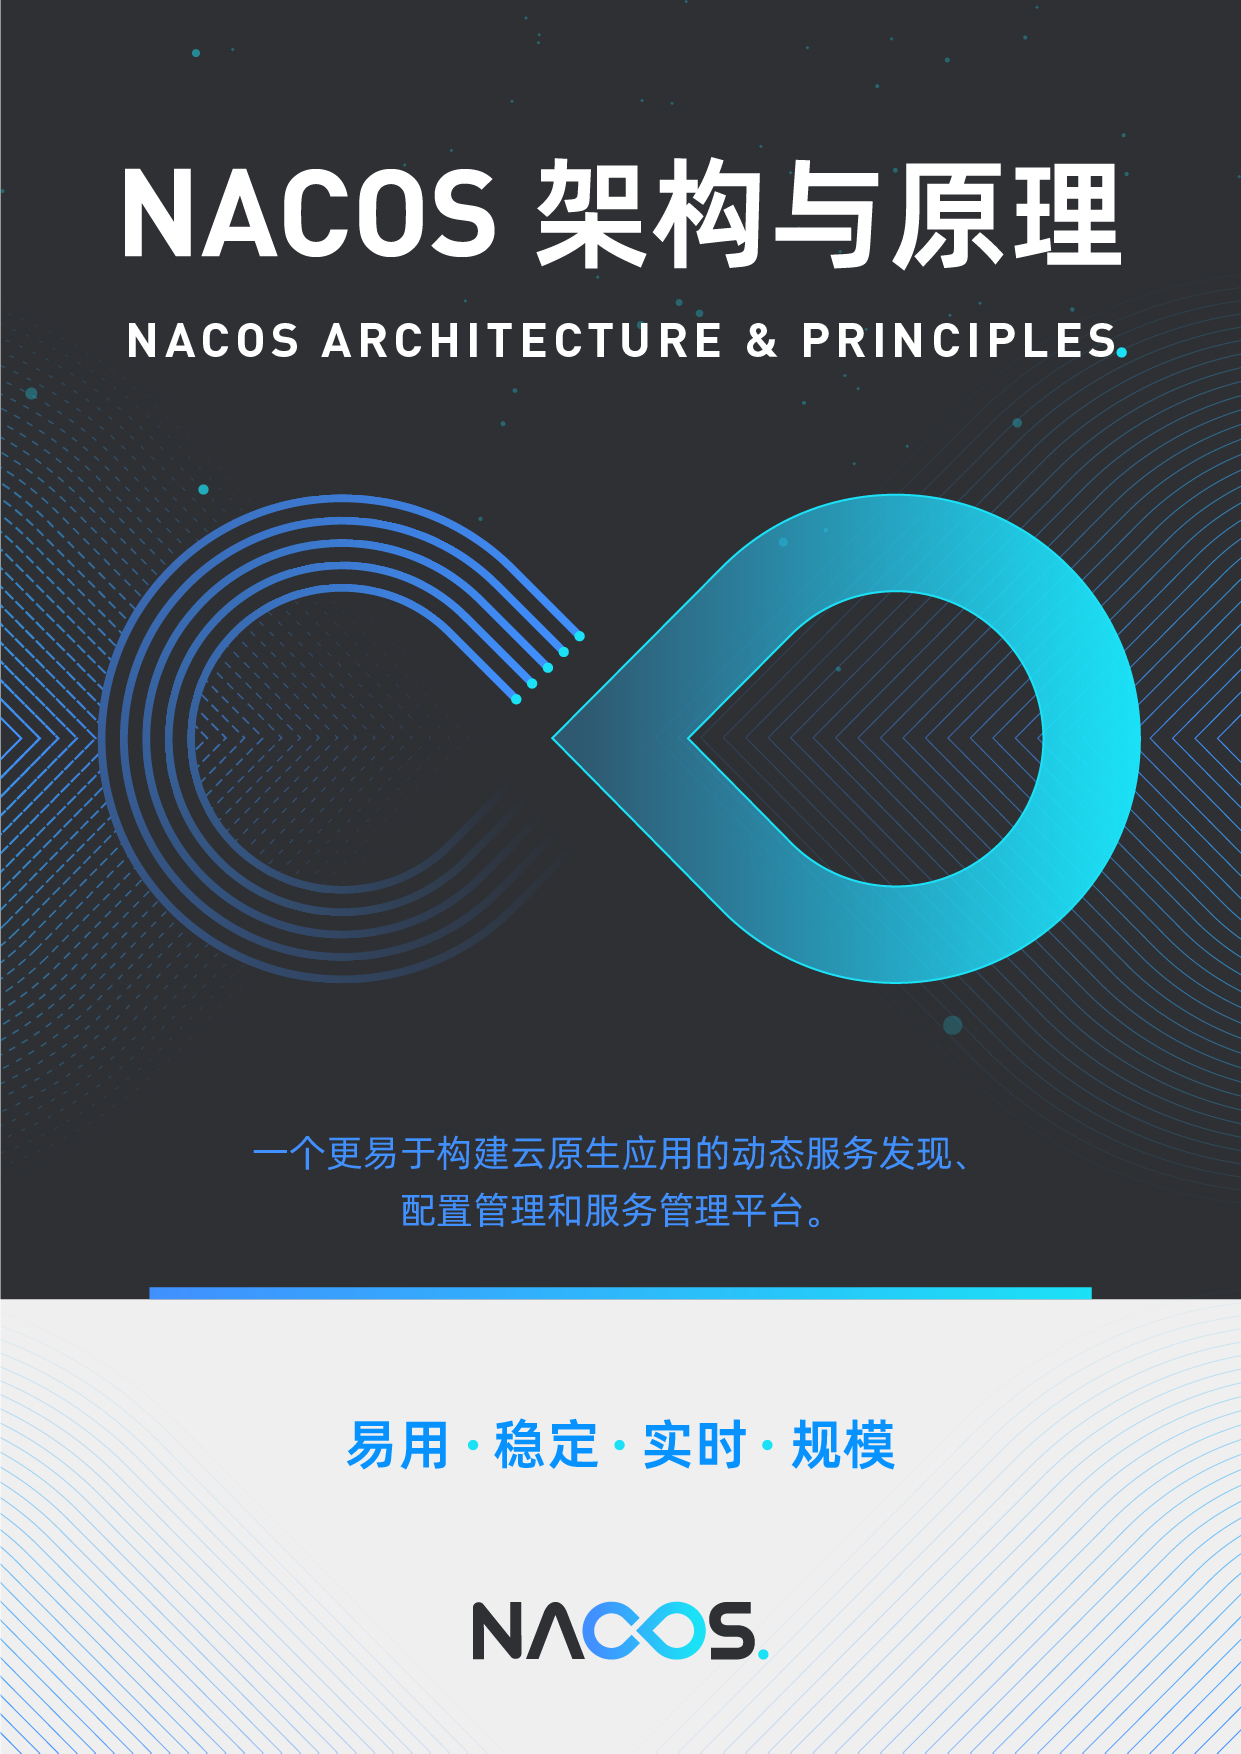 《Nacos 架构与原理》| Nacos社区首本电子书免费下载